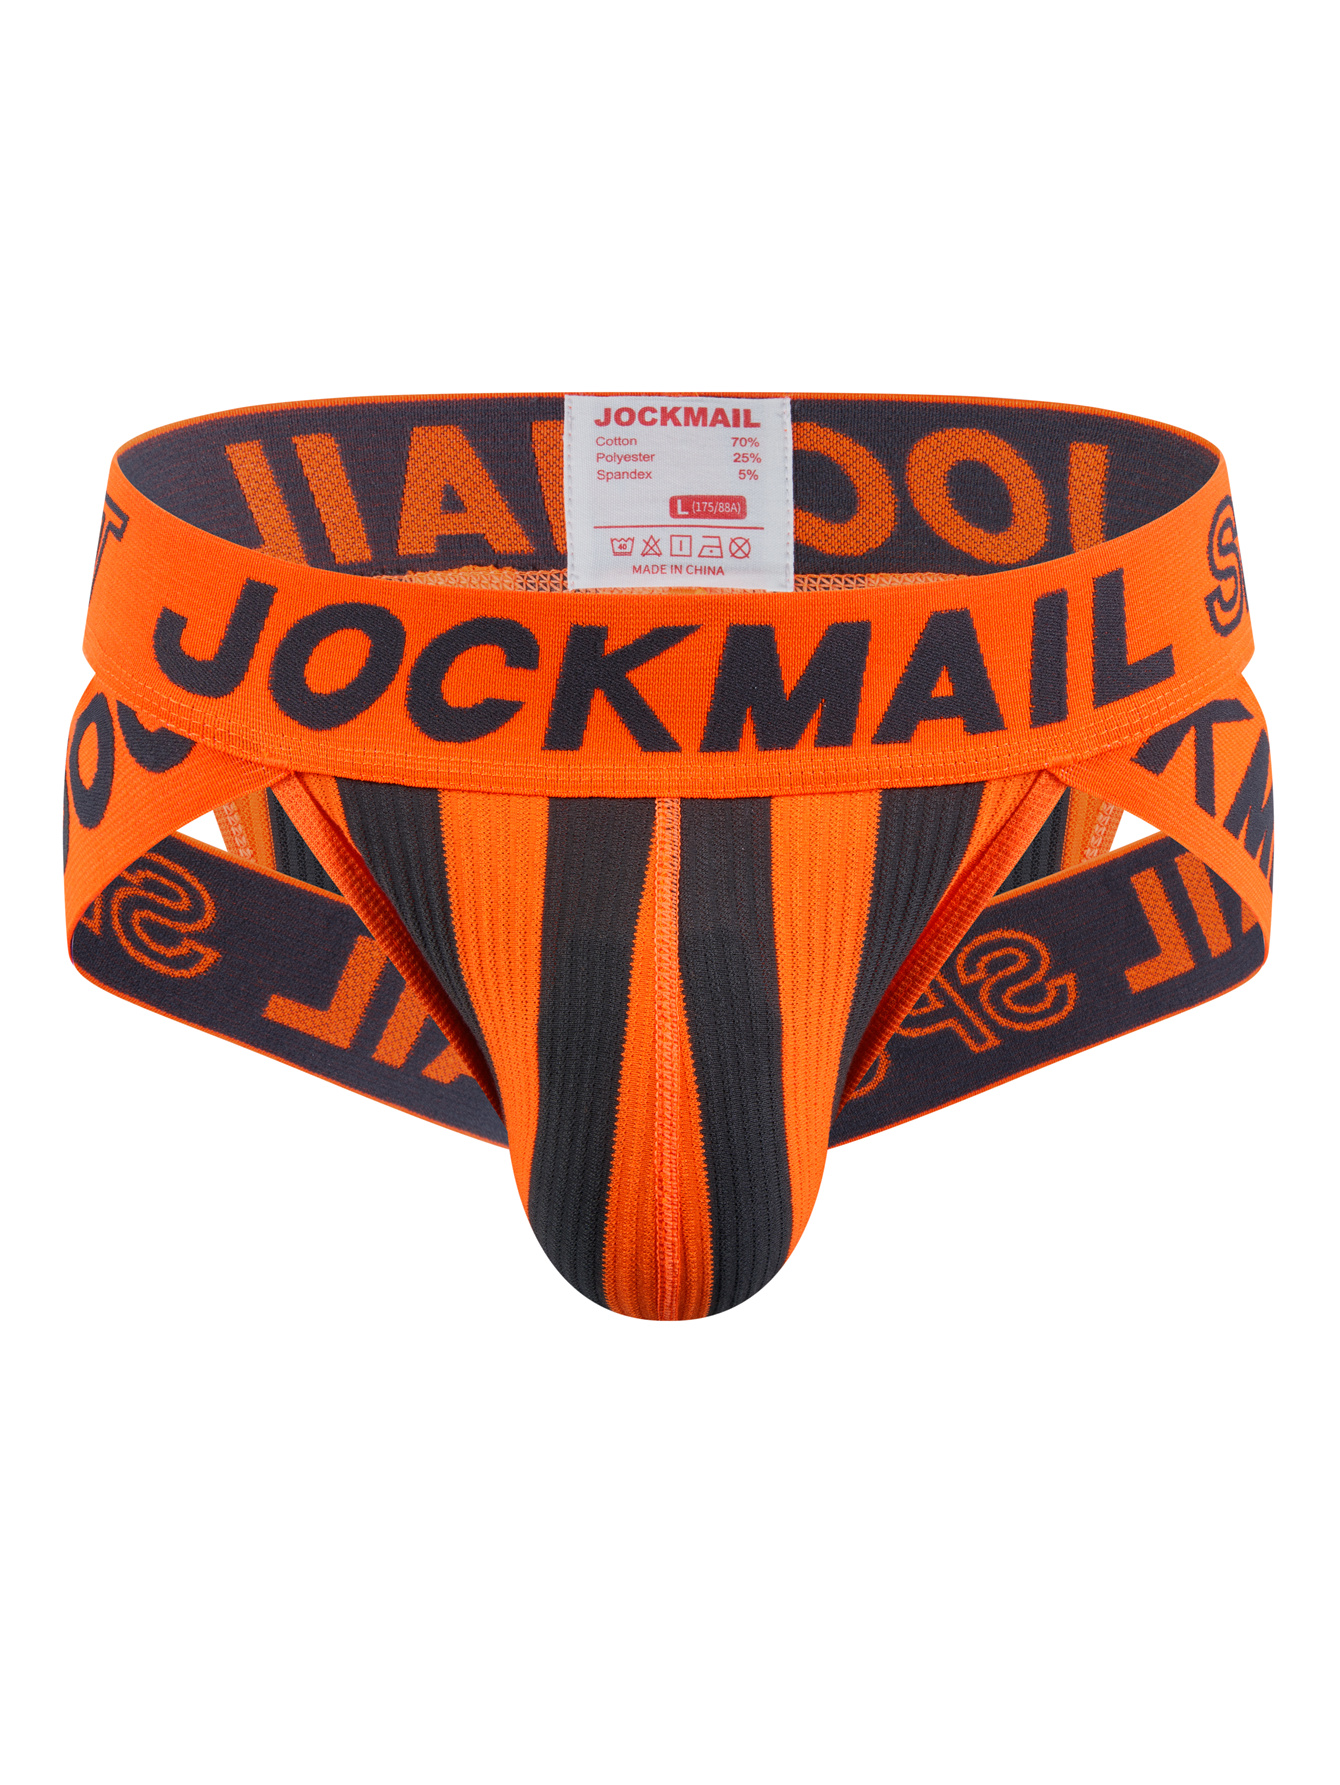 JOCKMAIL Cotton Men Boxer Sexy men underwear U convex Pouch